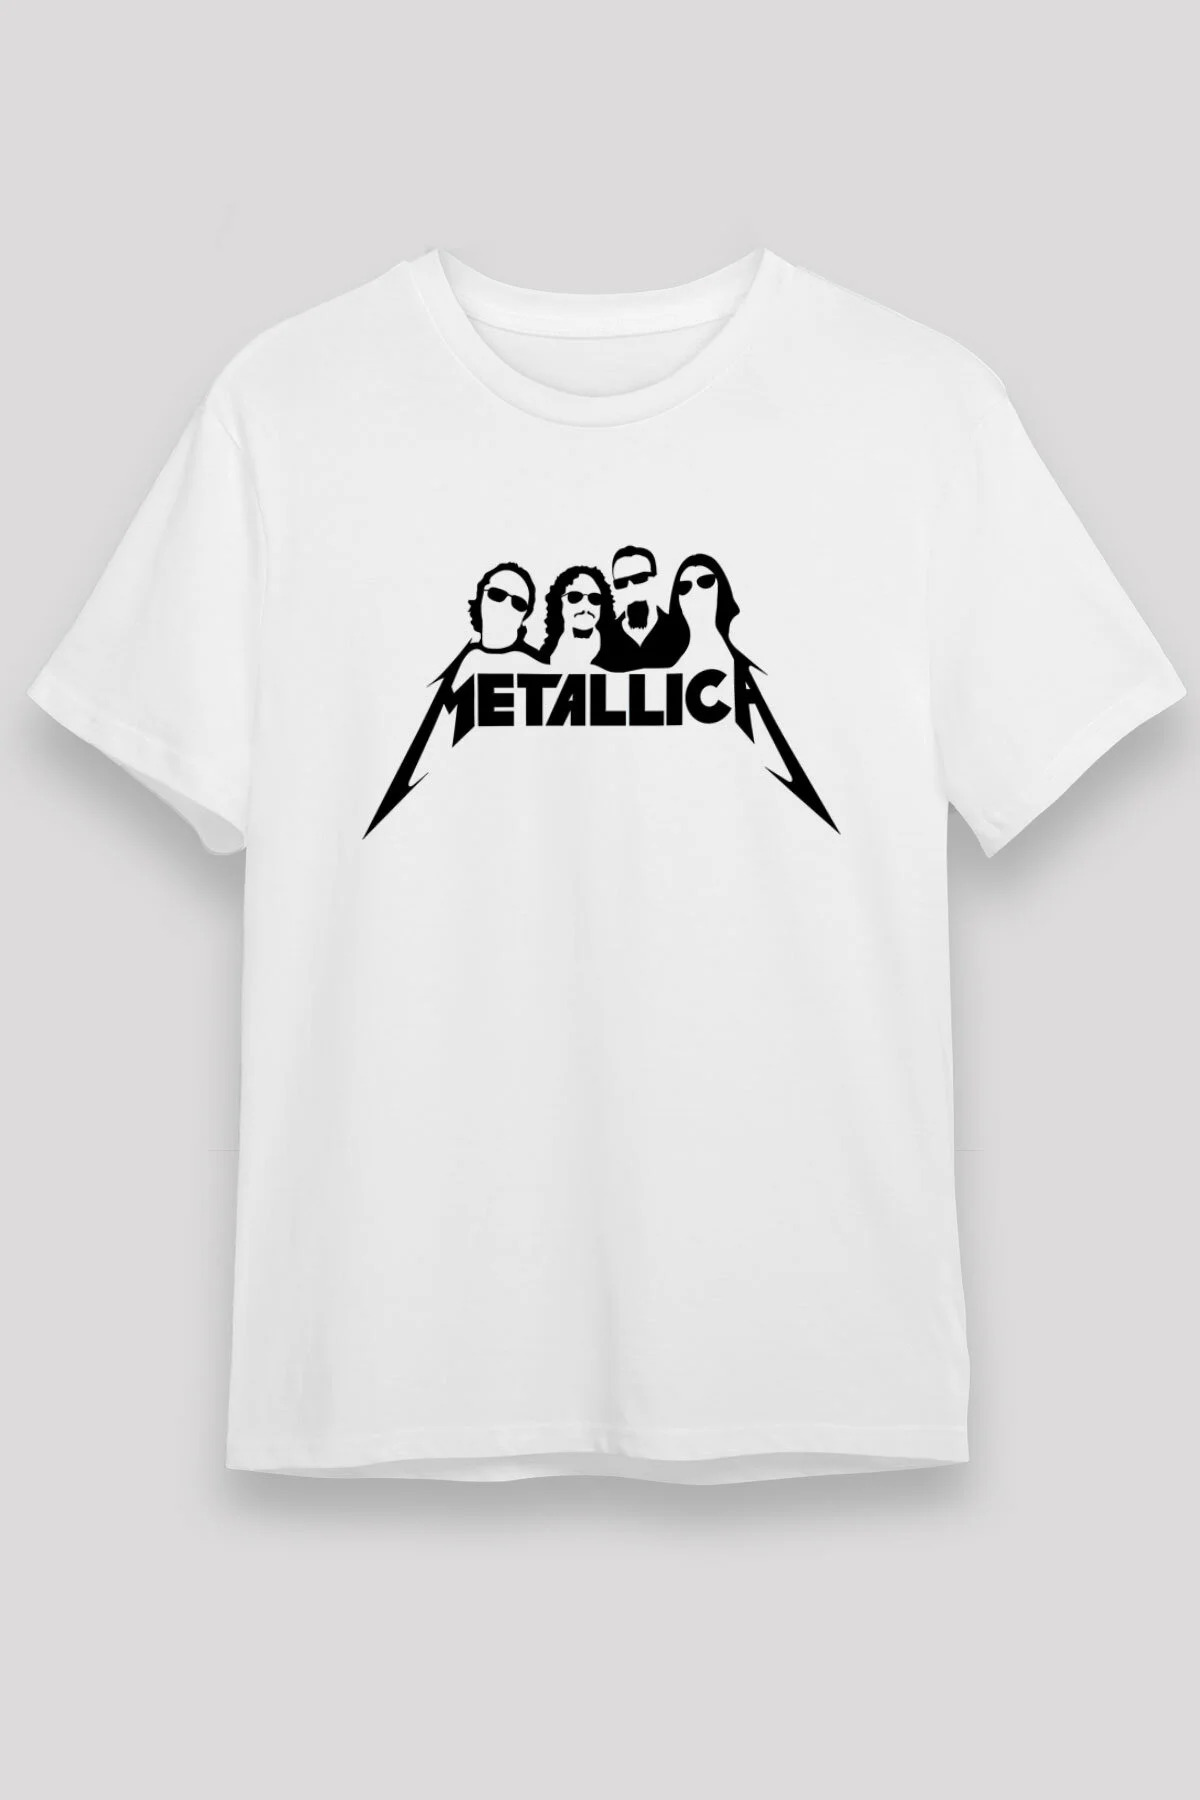 Metallica T shirt, Music Band ,Unisex Tshirt 10